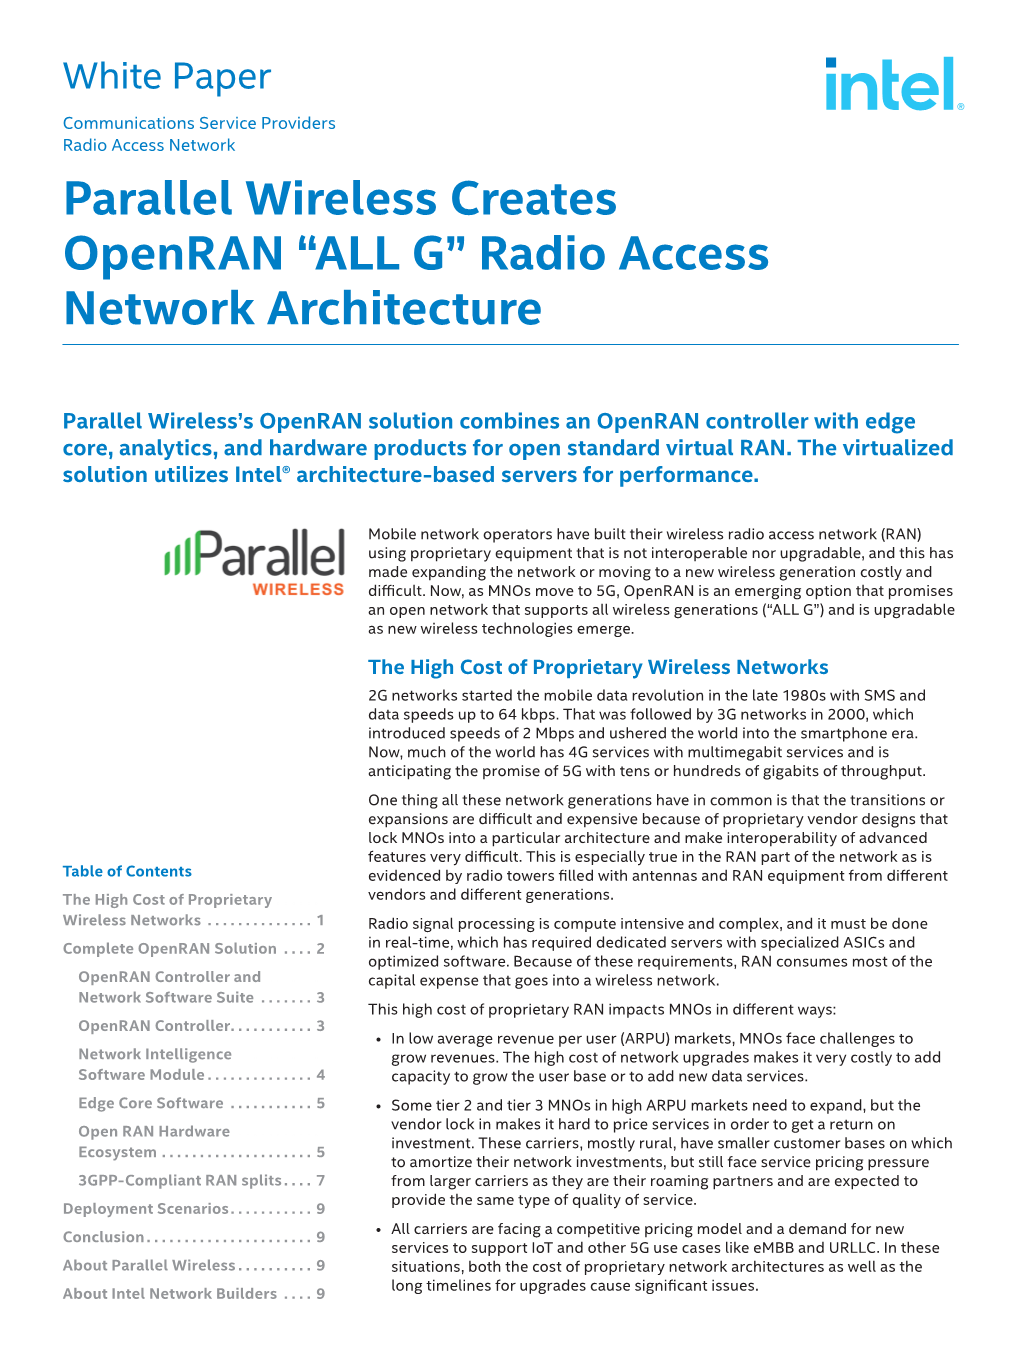 Parallel Wireless Creates Openran “ALL G” Radio Access Network Architecture